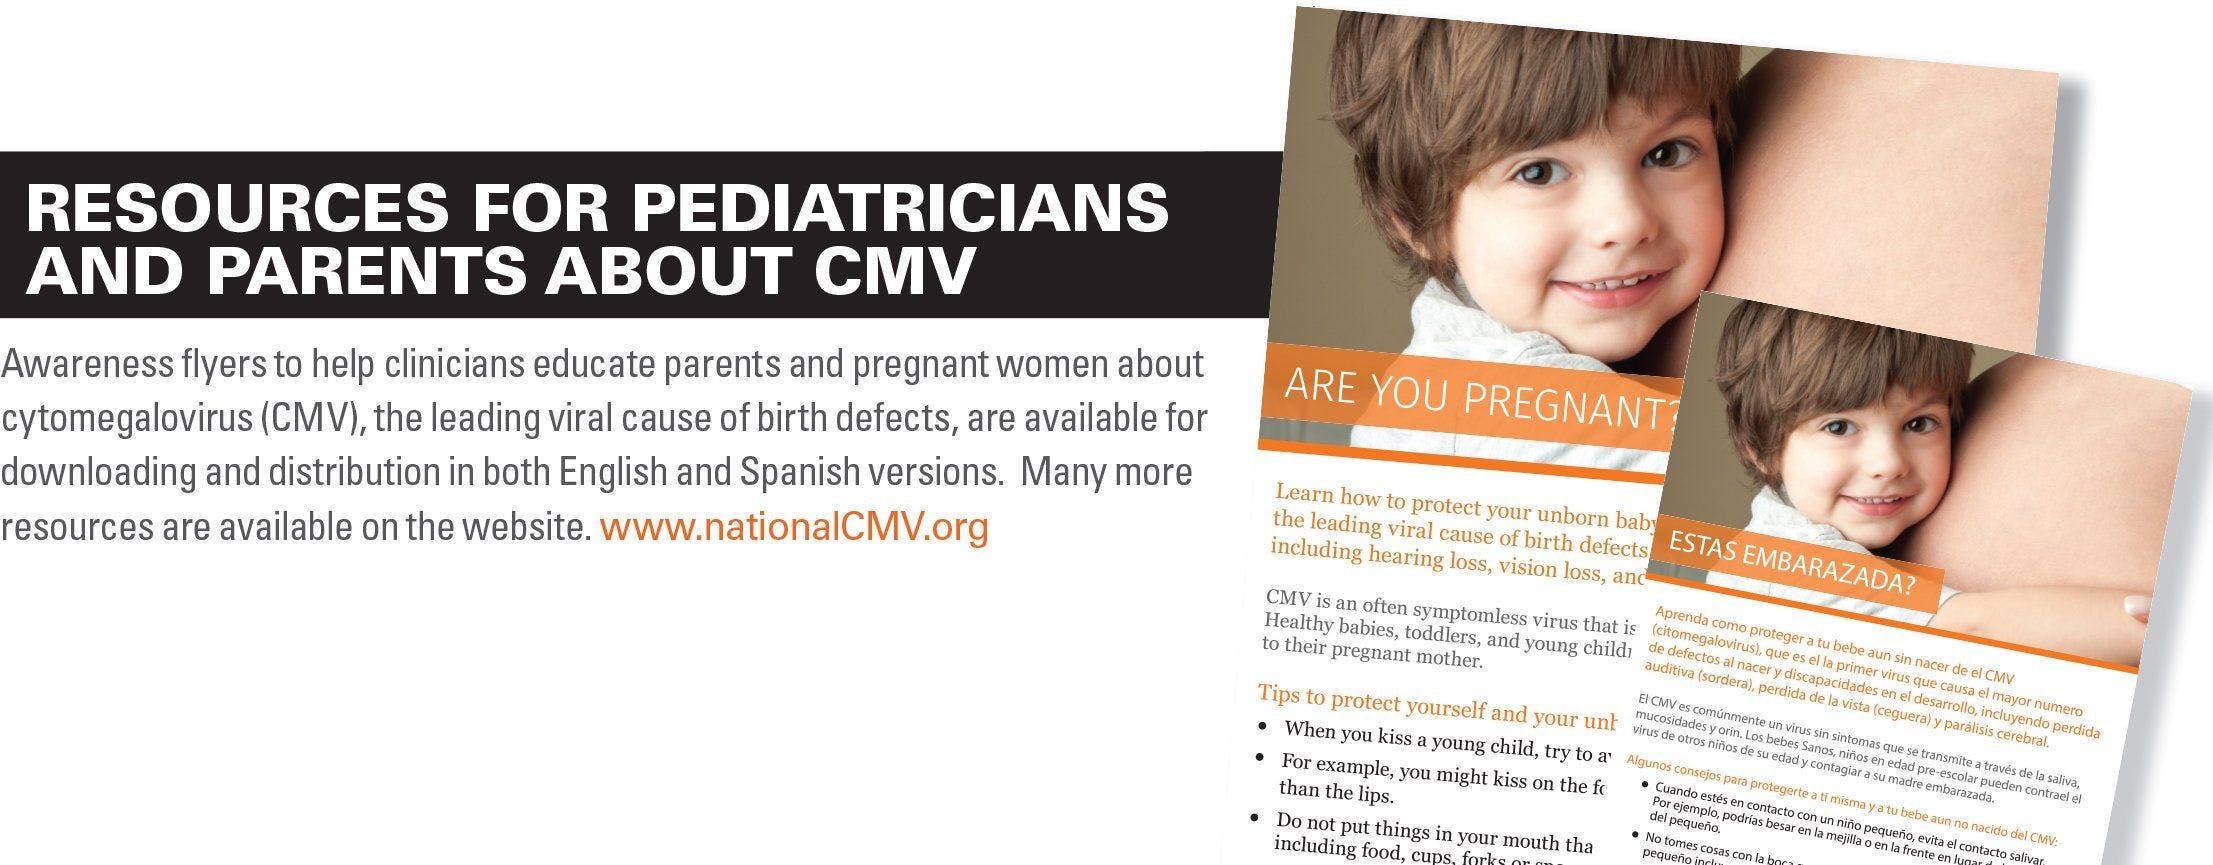 Resources for pediatricians and parents about CMV